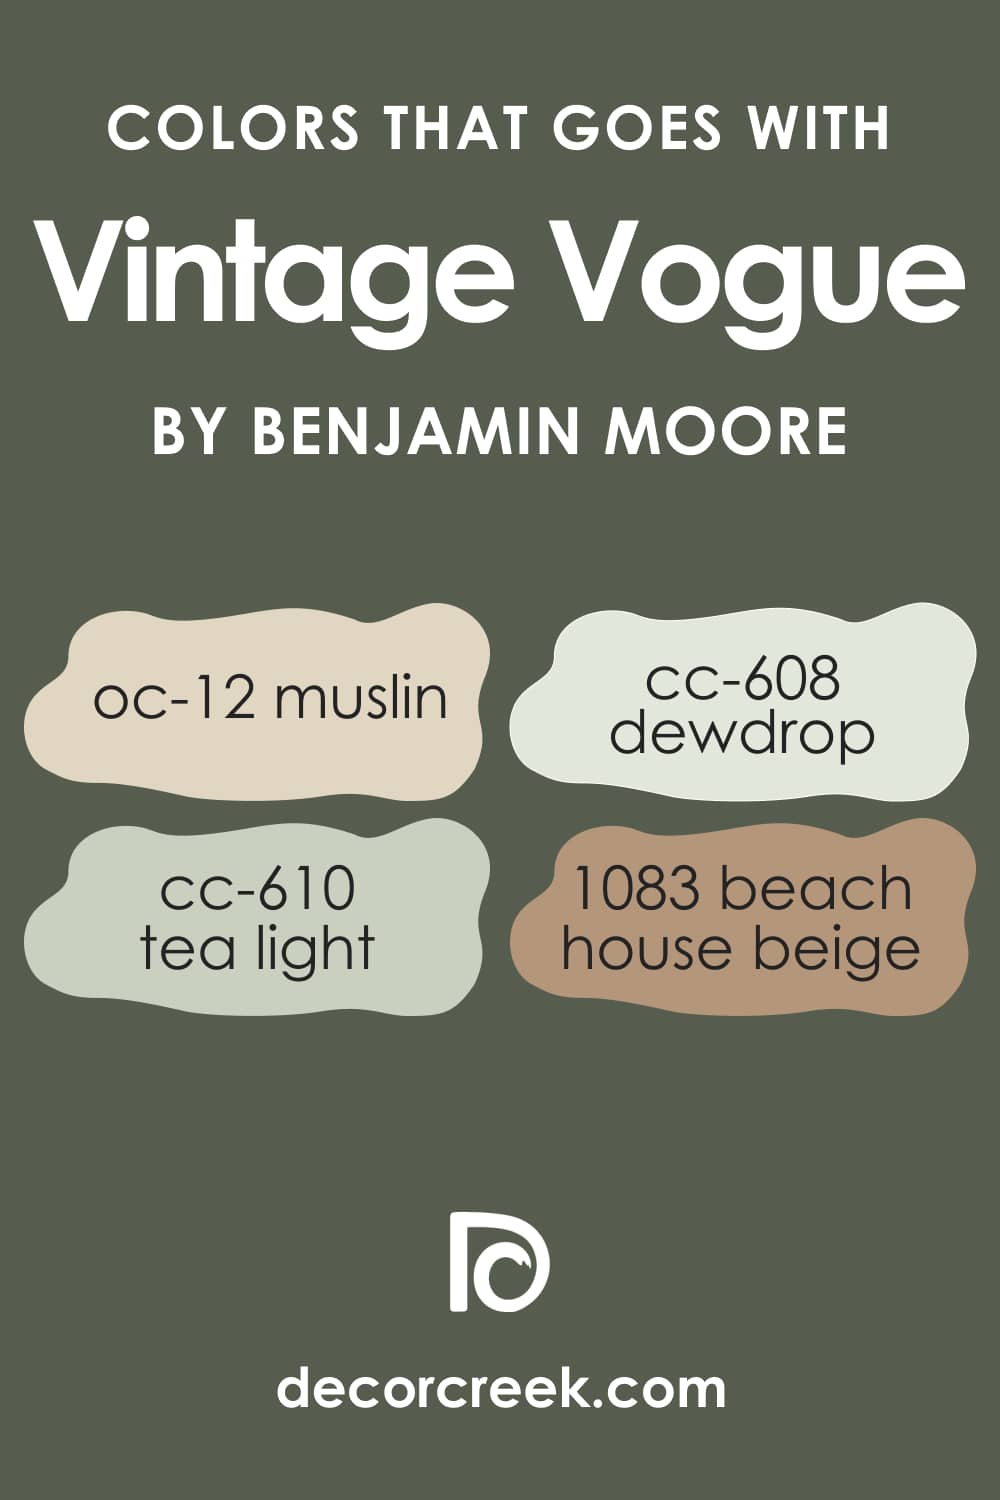 Colors that go with Vintage Vogue 462 